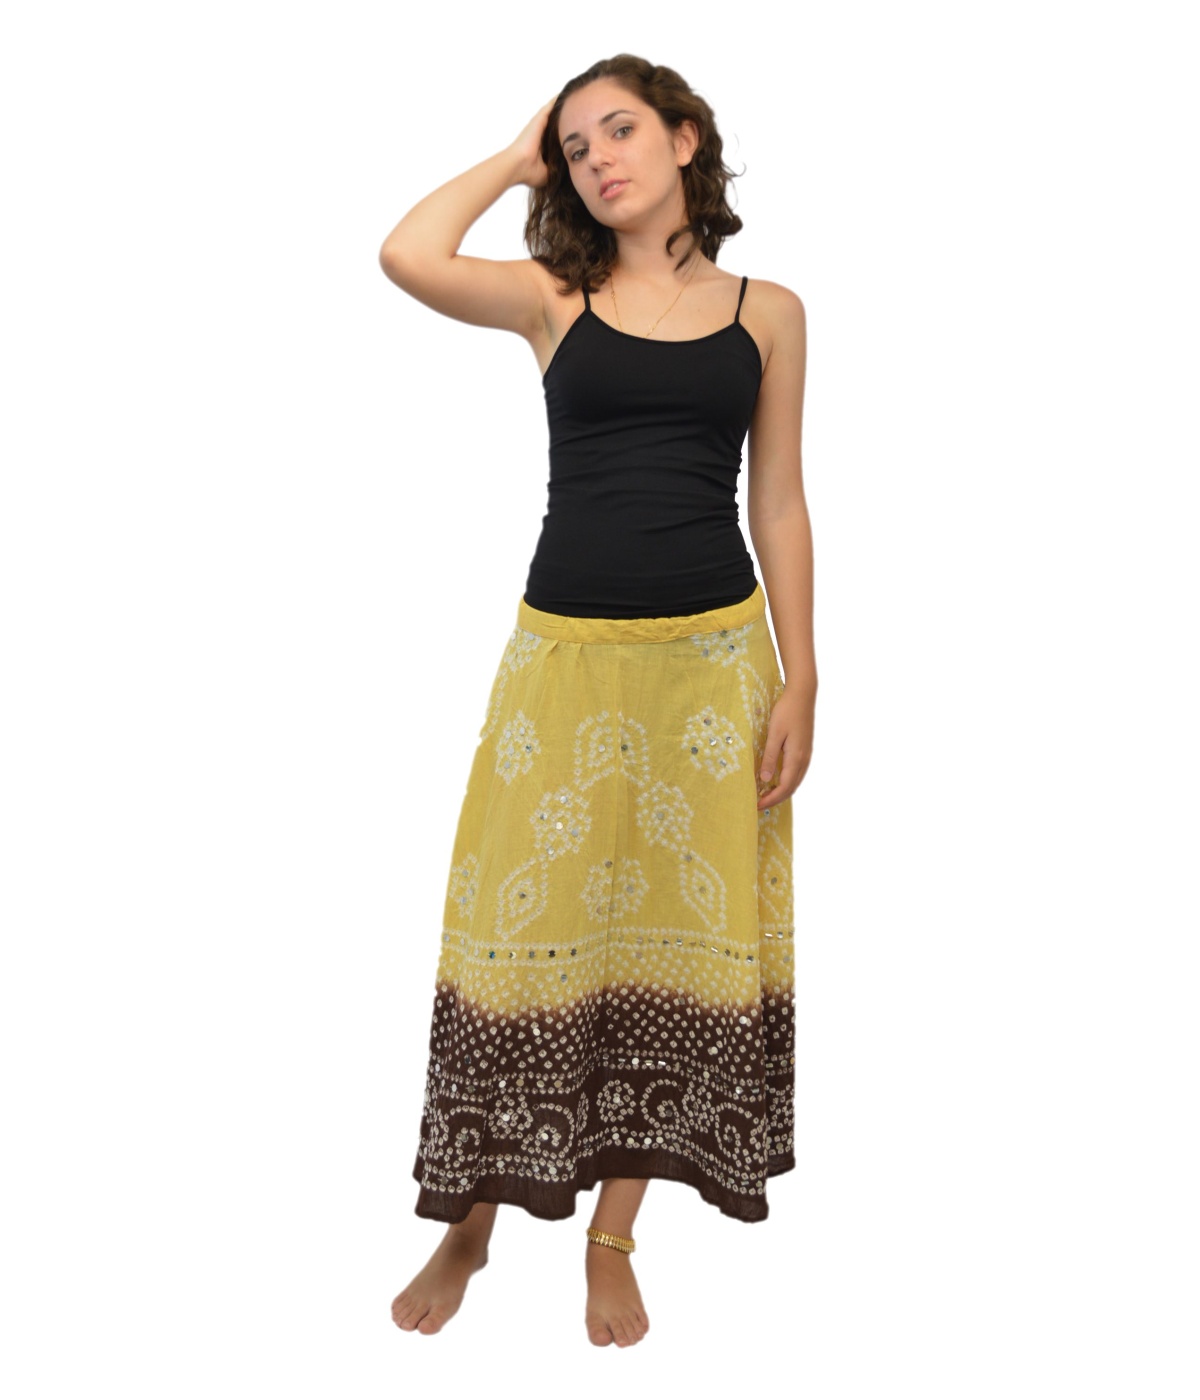  Cotton Indian Skirt Anklet